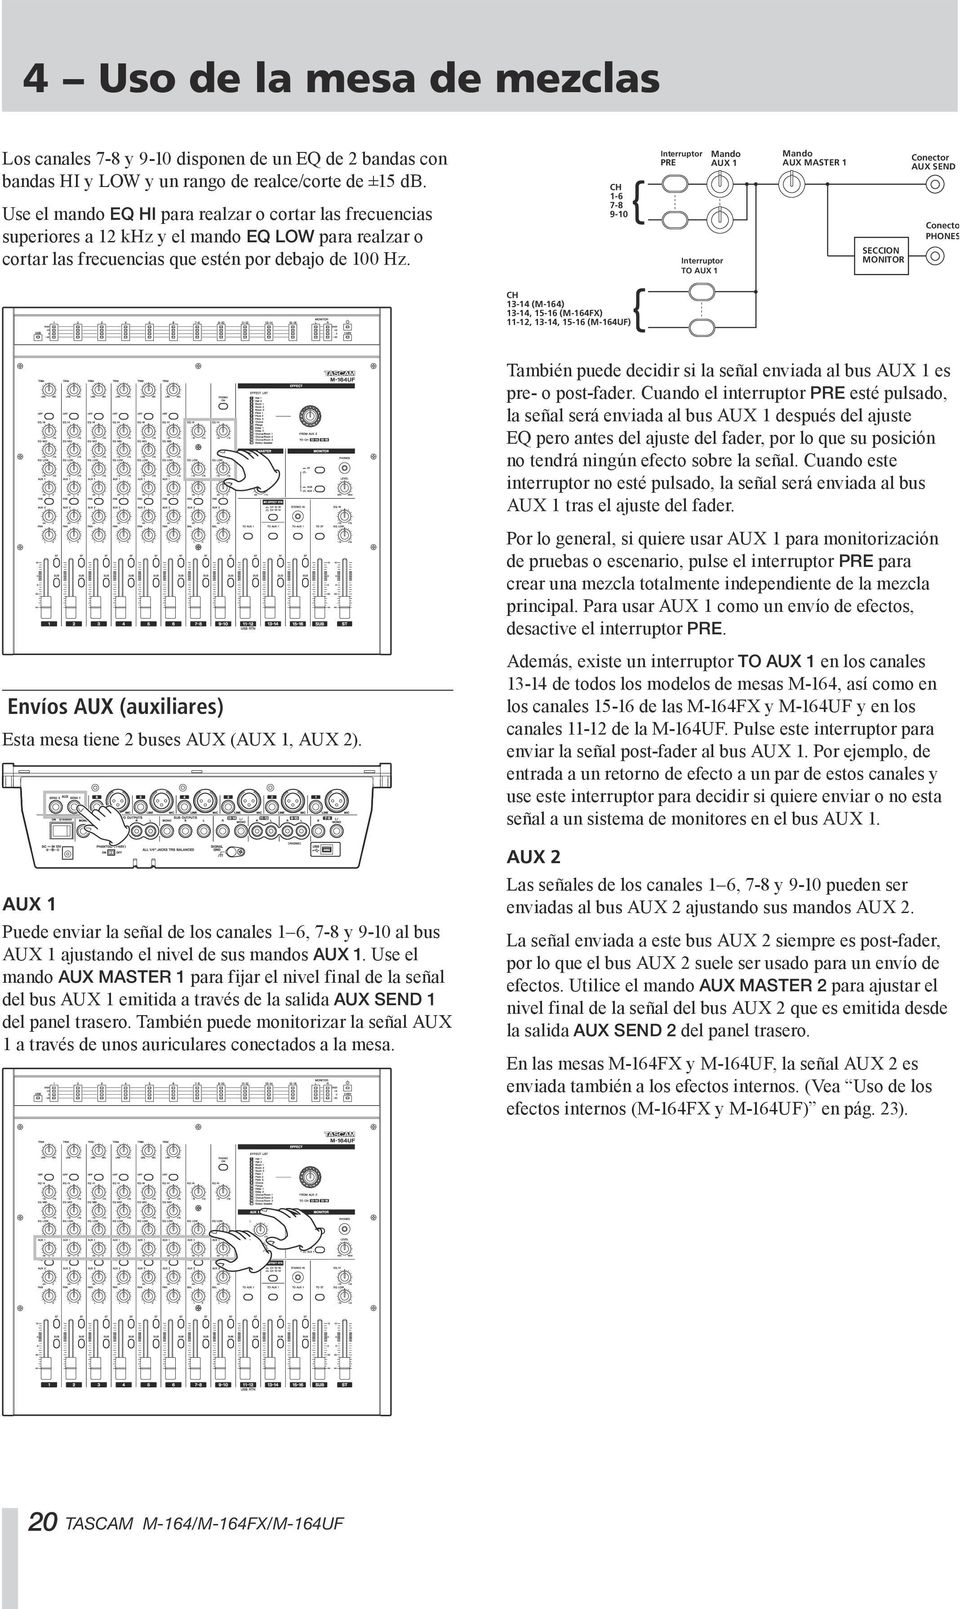 CH 1-6 7-8 9-10 Interruptor PRE Interruptor TO AUX 1 Mando AUX 1 Mando AUX MASTER 1 SECCION MONITOR Conector AUX SEND 1 Conector PHONES CH 13-14 (M-164) 13-14, 15-16 (M-164FX) 11-12, 13-14, 15-16